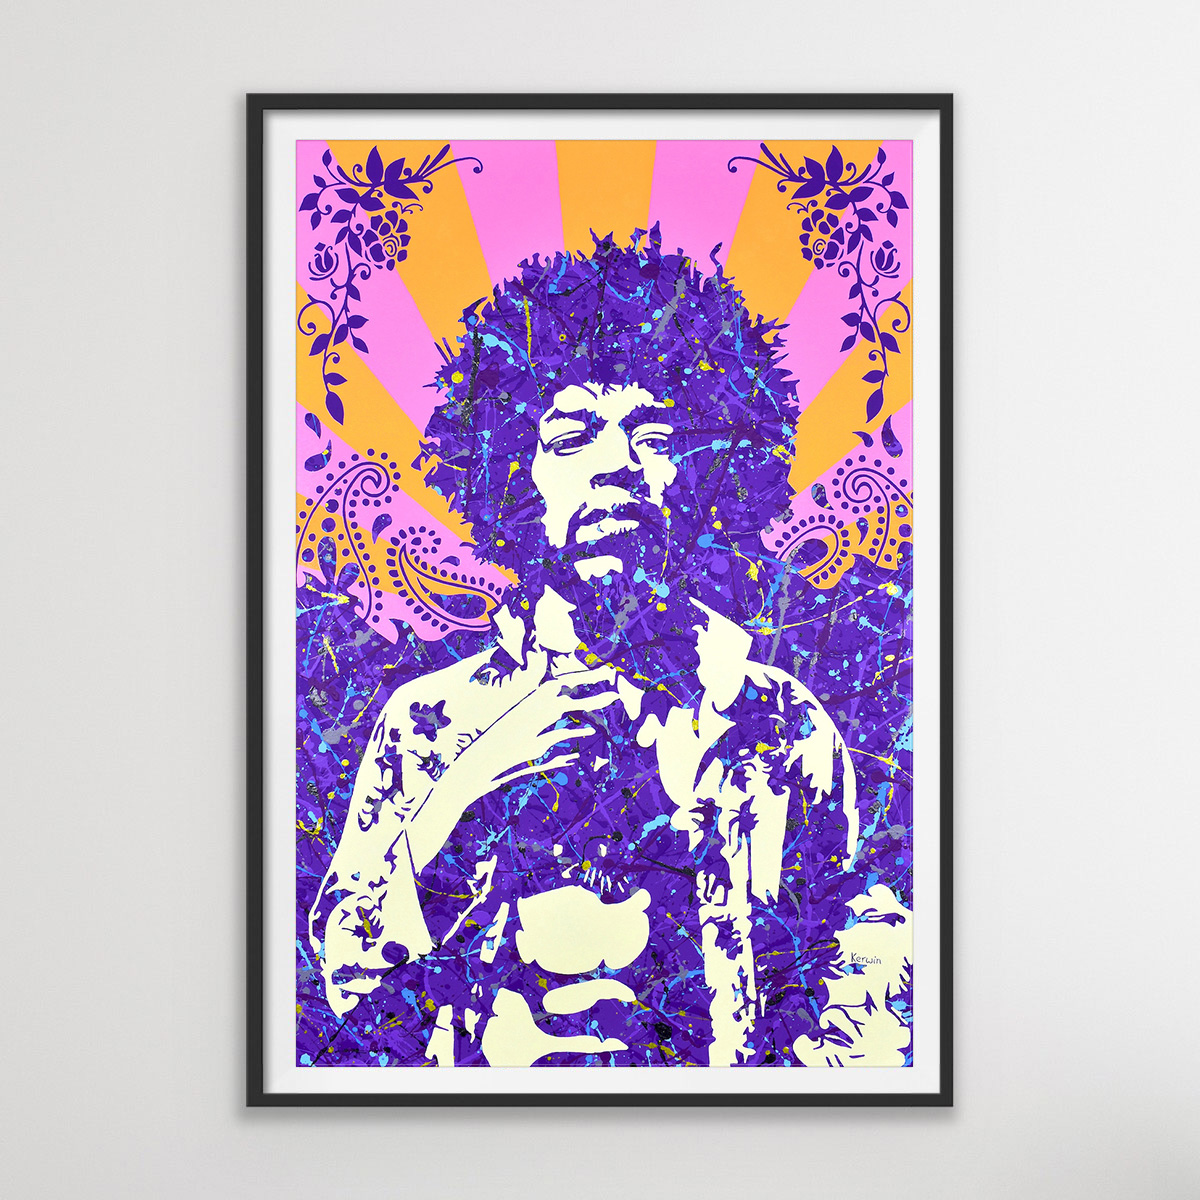 Jimi Hendrix pop art painting in a Jackson Pollock style | By Kerwin | Art prints